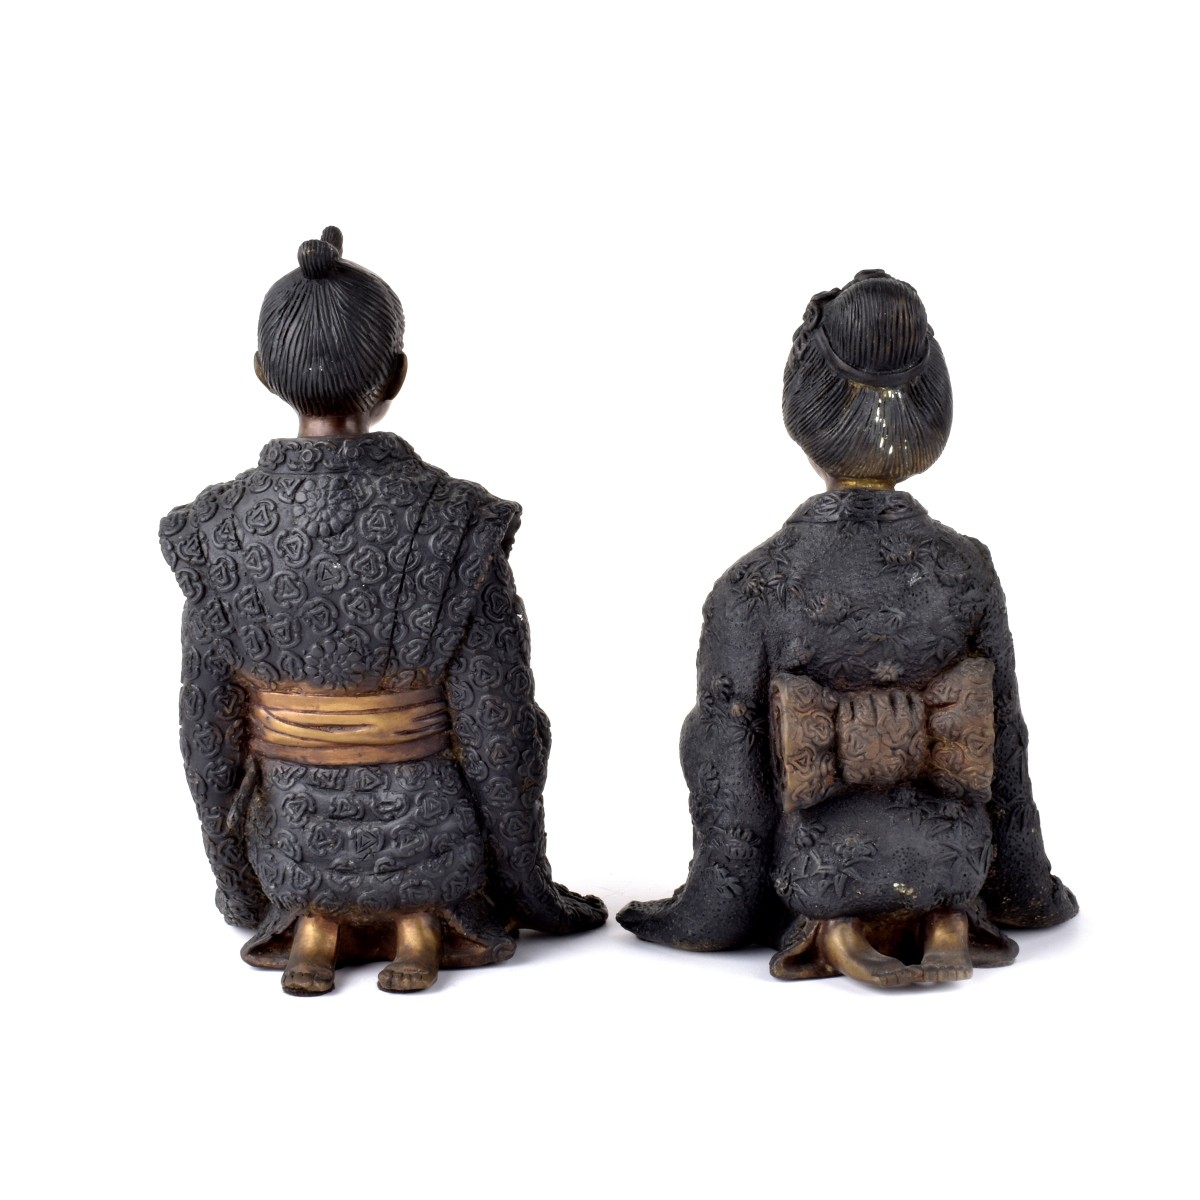 Japanese Sculptures